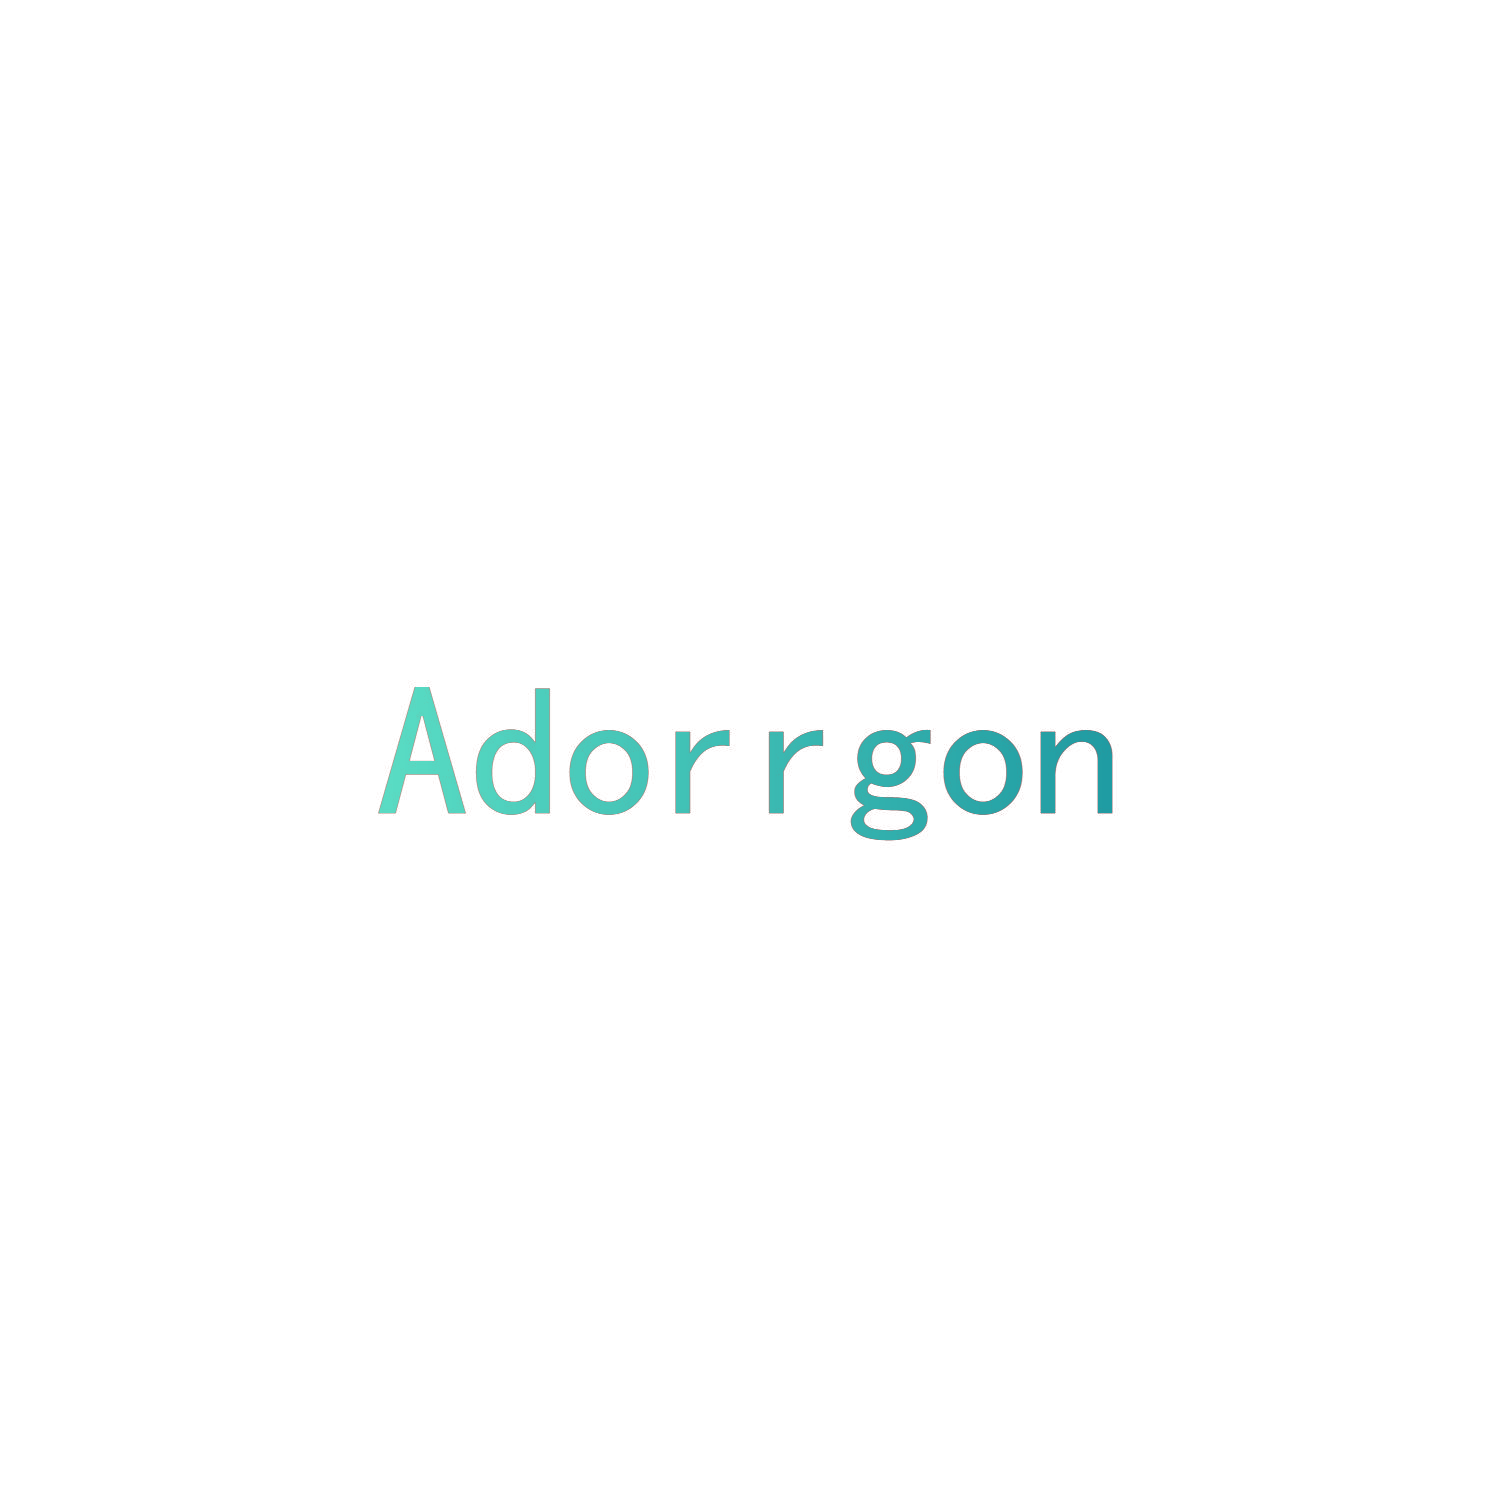 ADORRGON